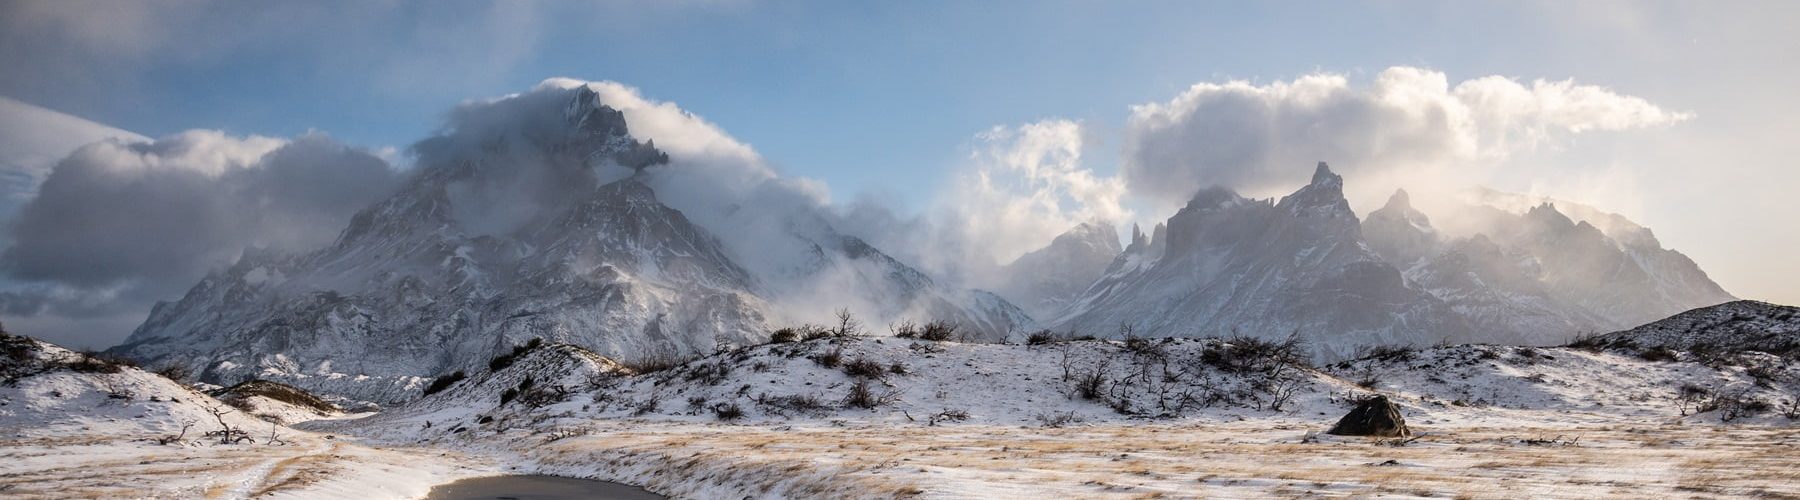 Torres del Paine Winter W Trek v 2